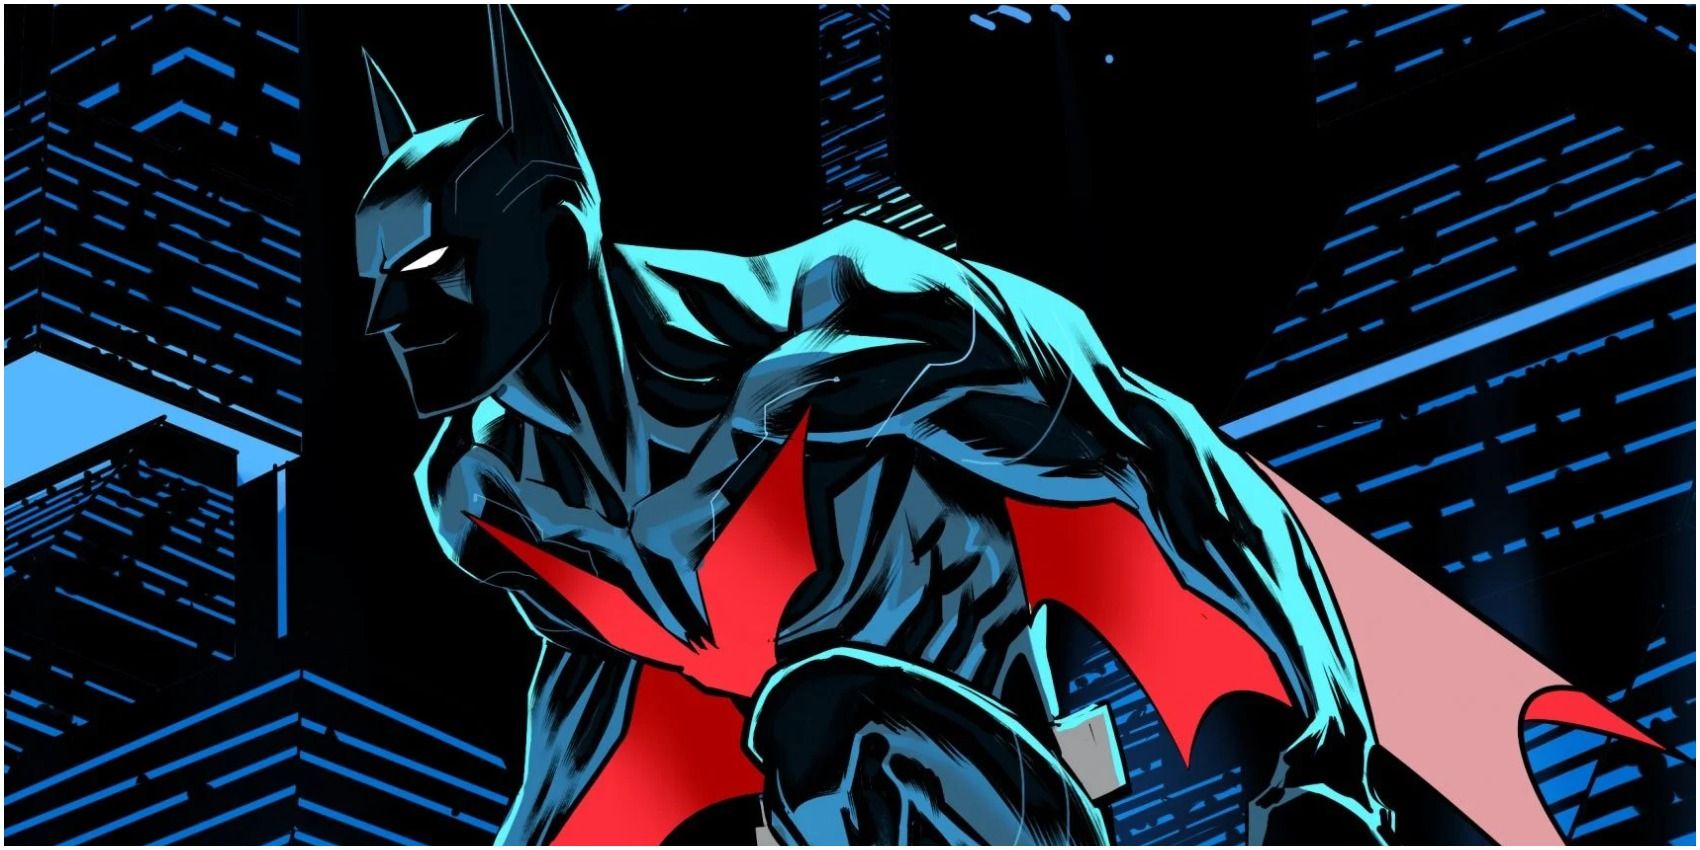 Art for Terry McGinnis as Batman in Batman Beyond illustrated by Dan Mora